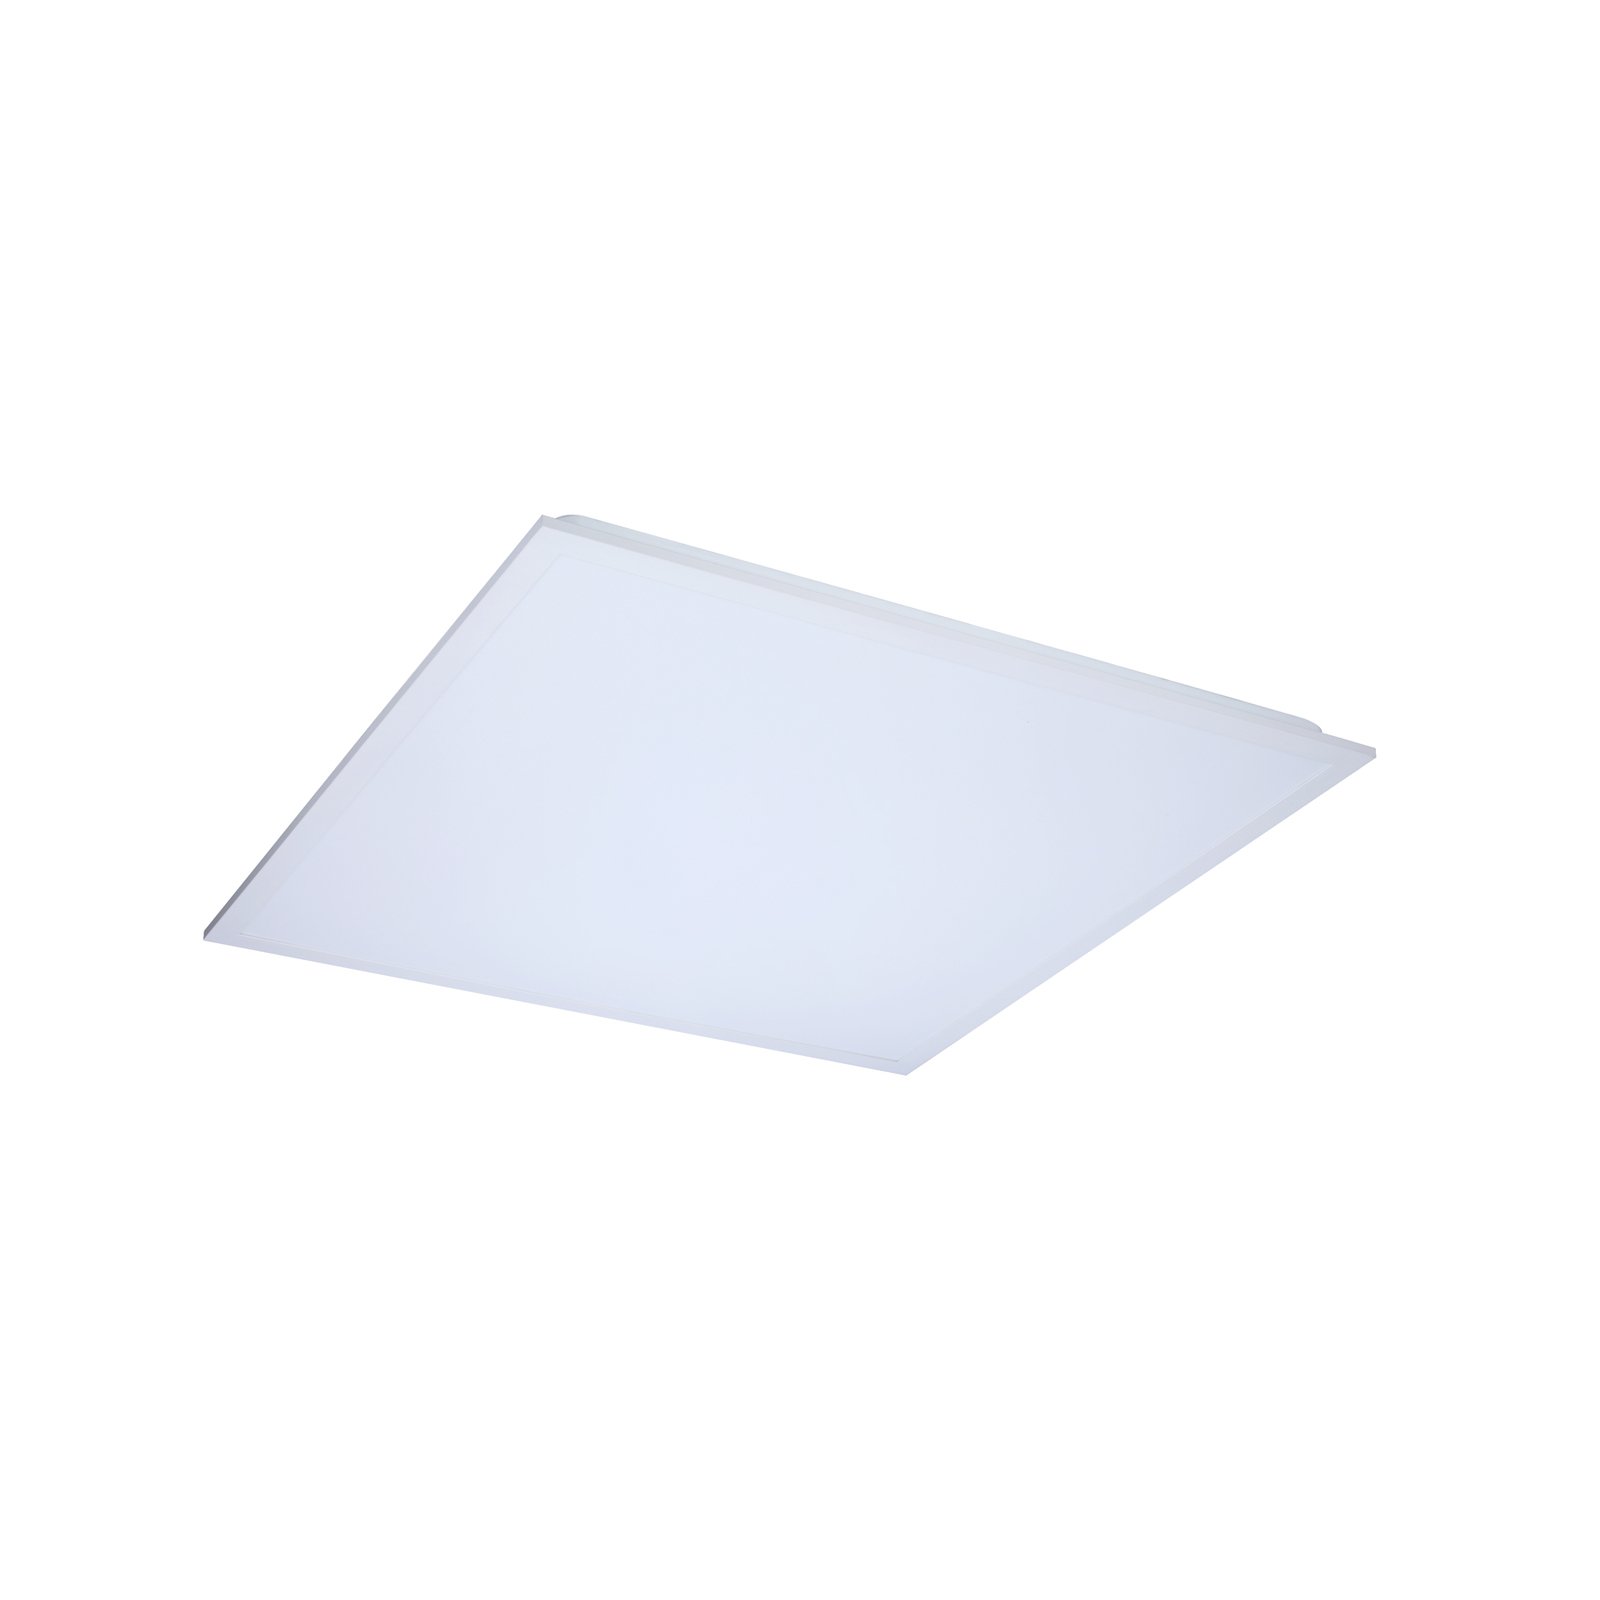 Pannello LED Sylvania Start, bianco, 62 x 62 cm, 30 W, UGR19, 840